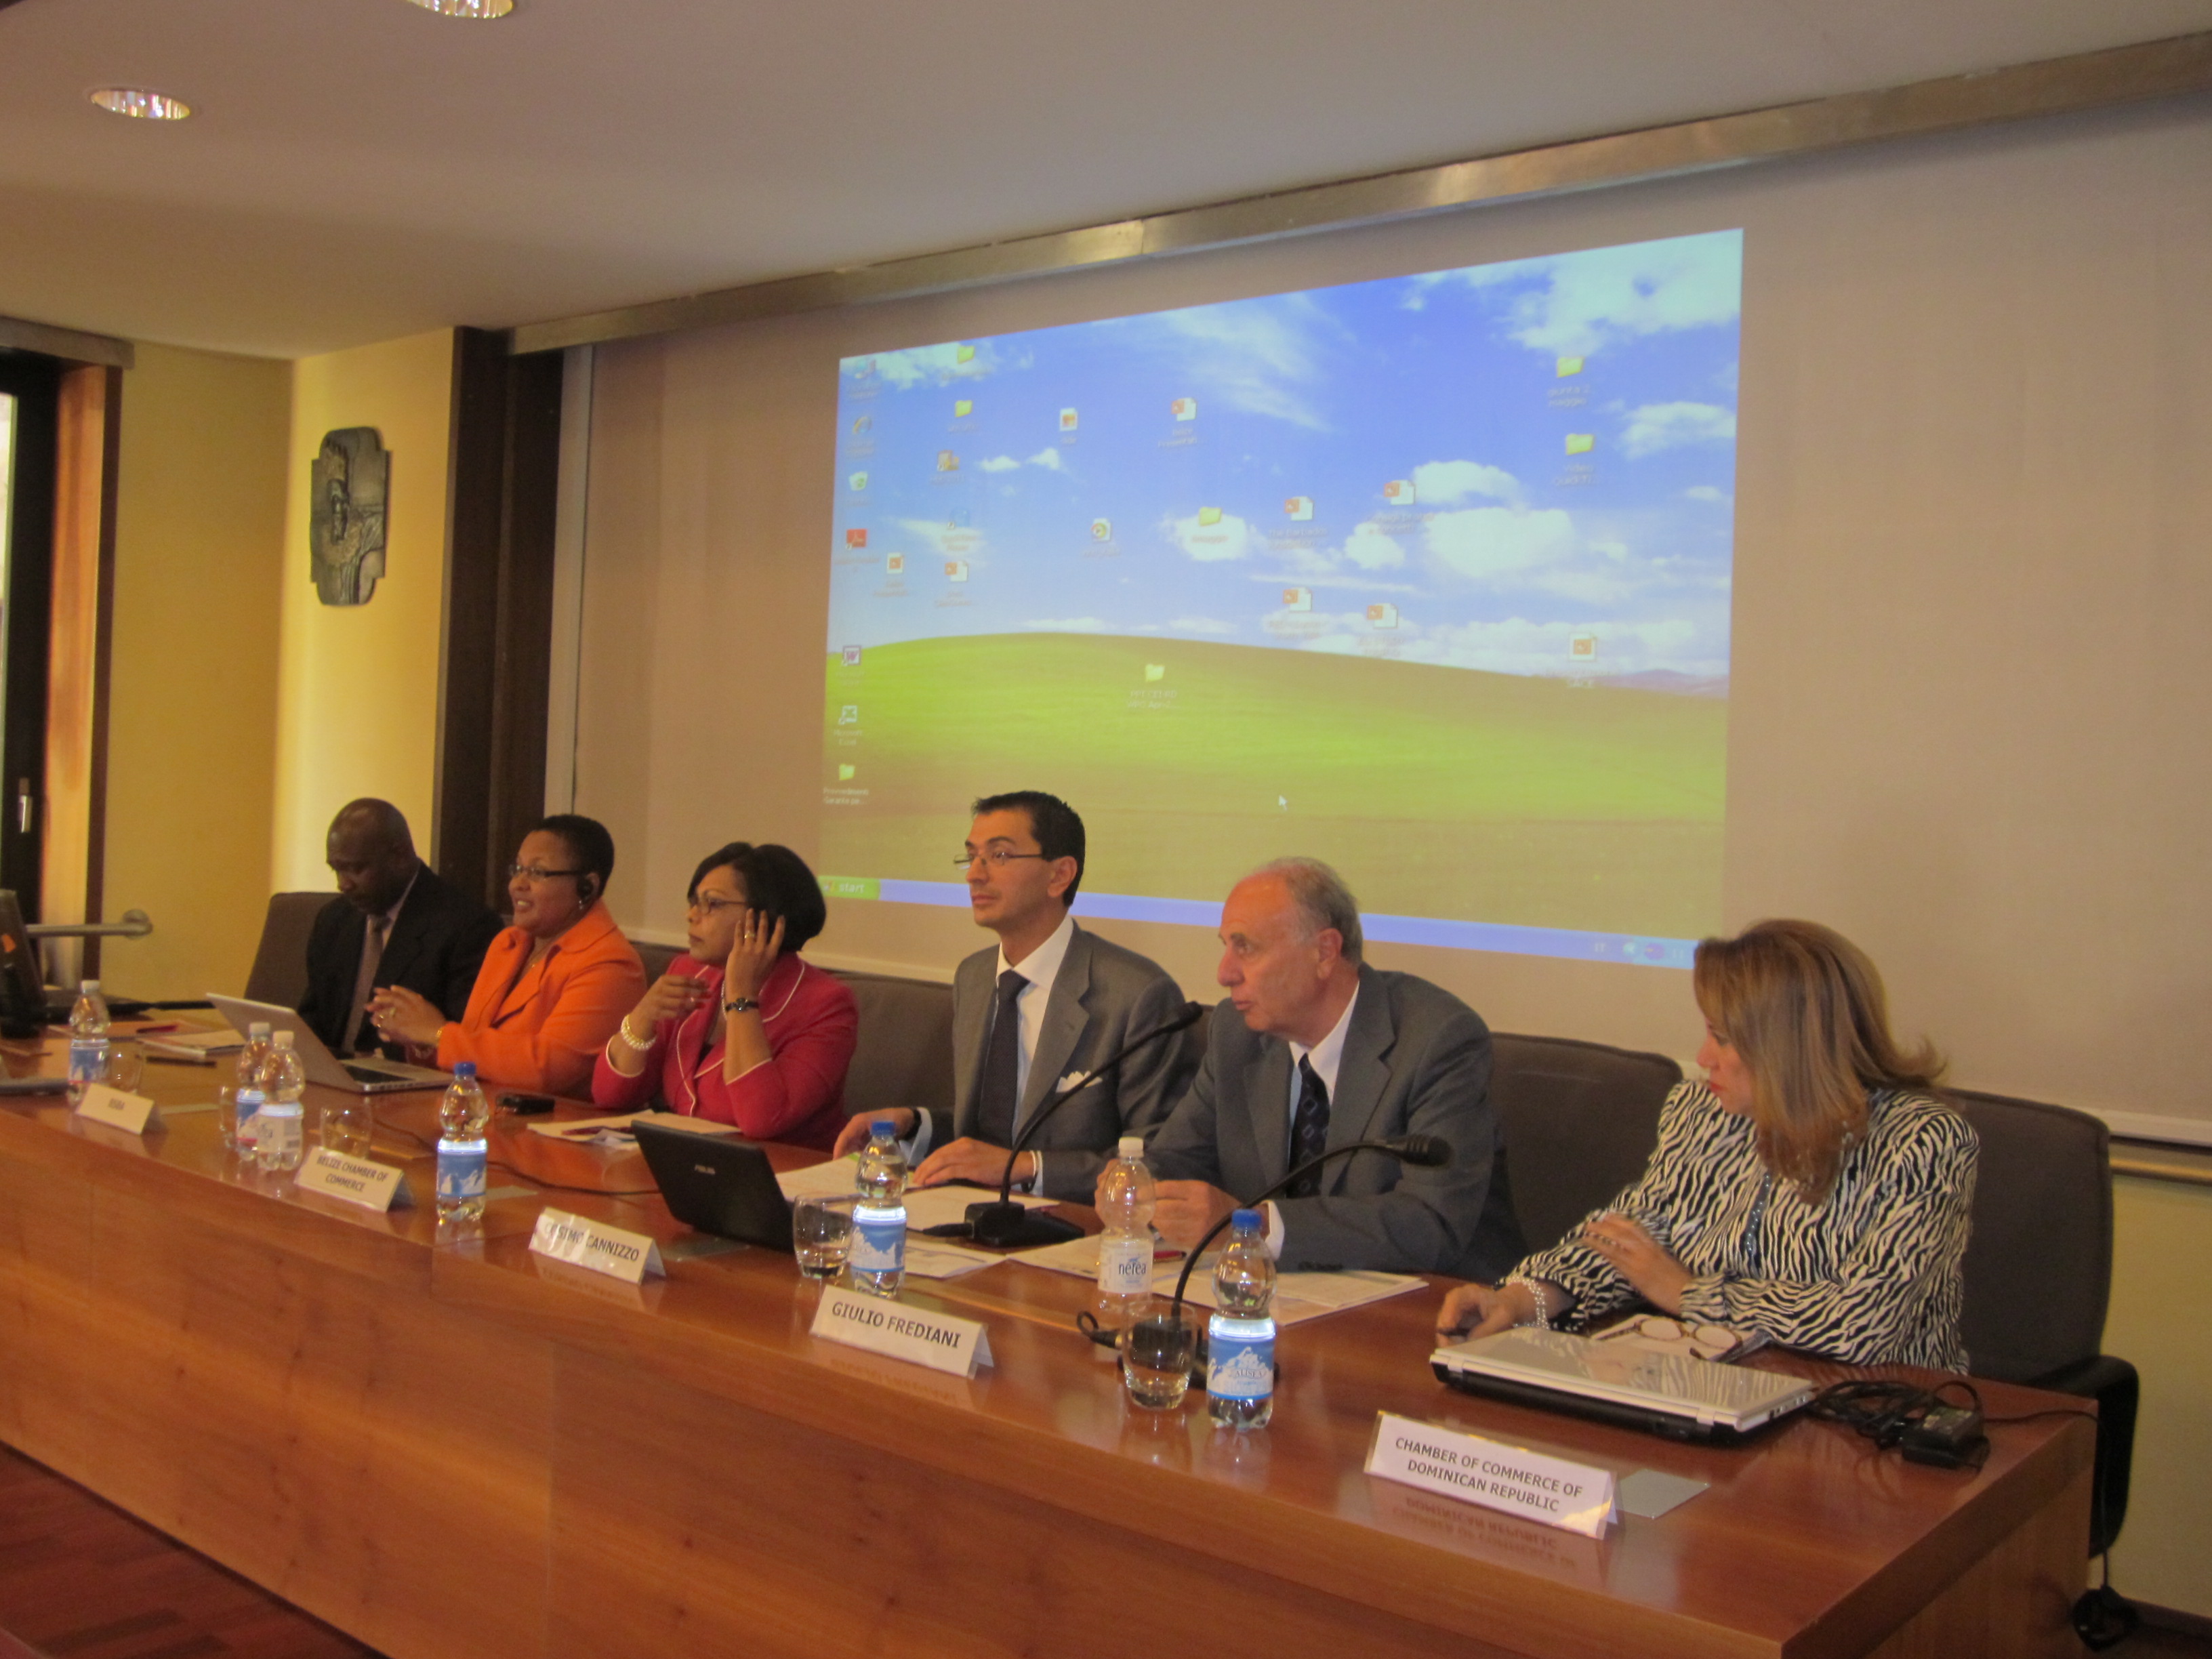 P.E.D. – Promoting the Economic Development through European and Caribbean